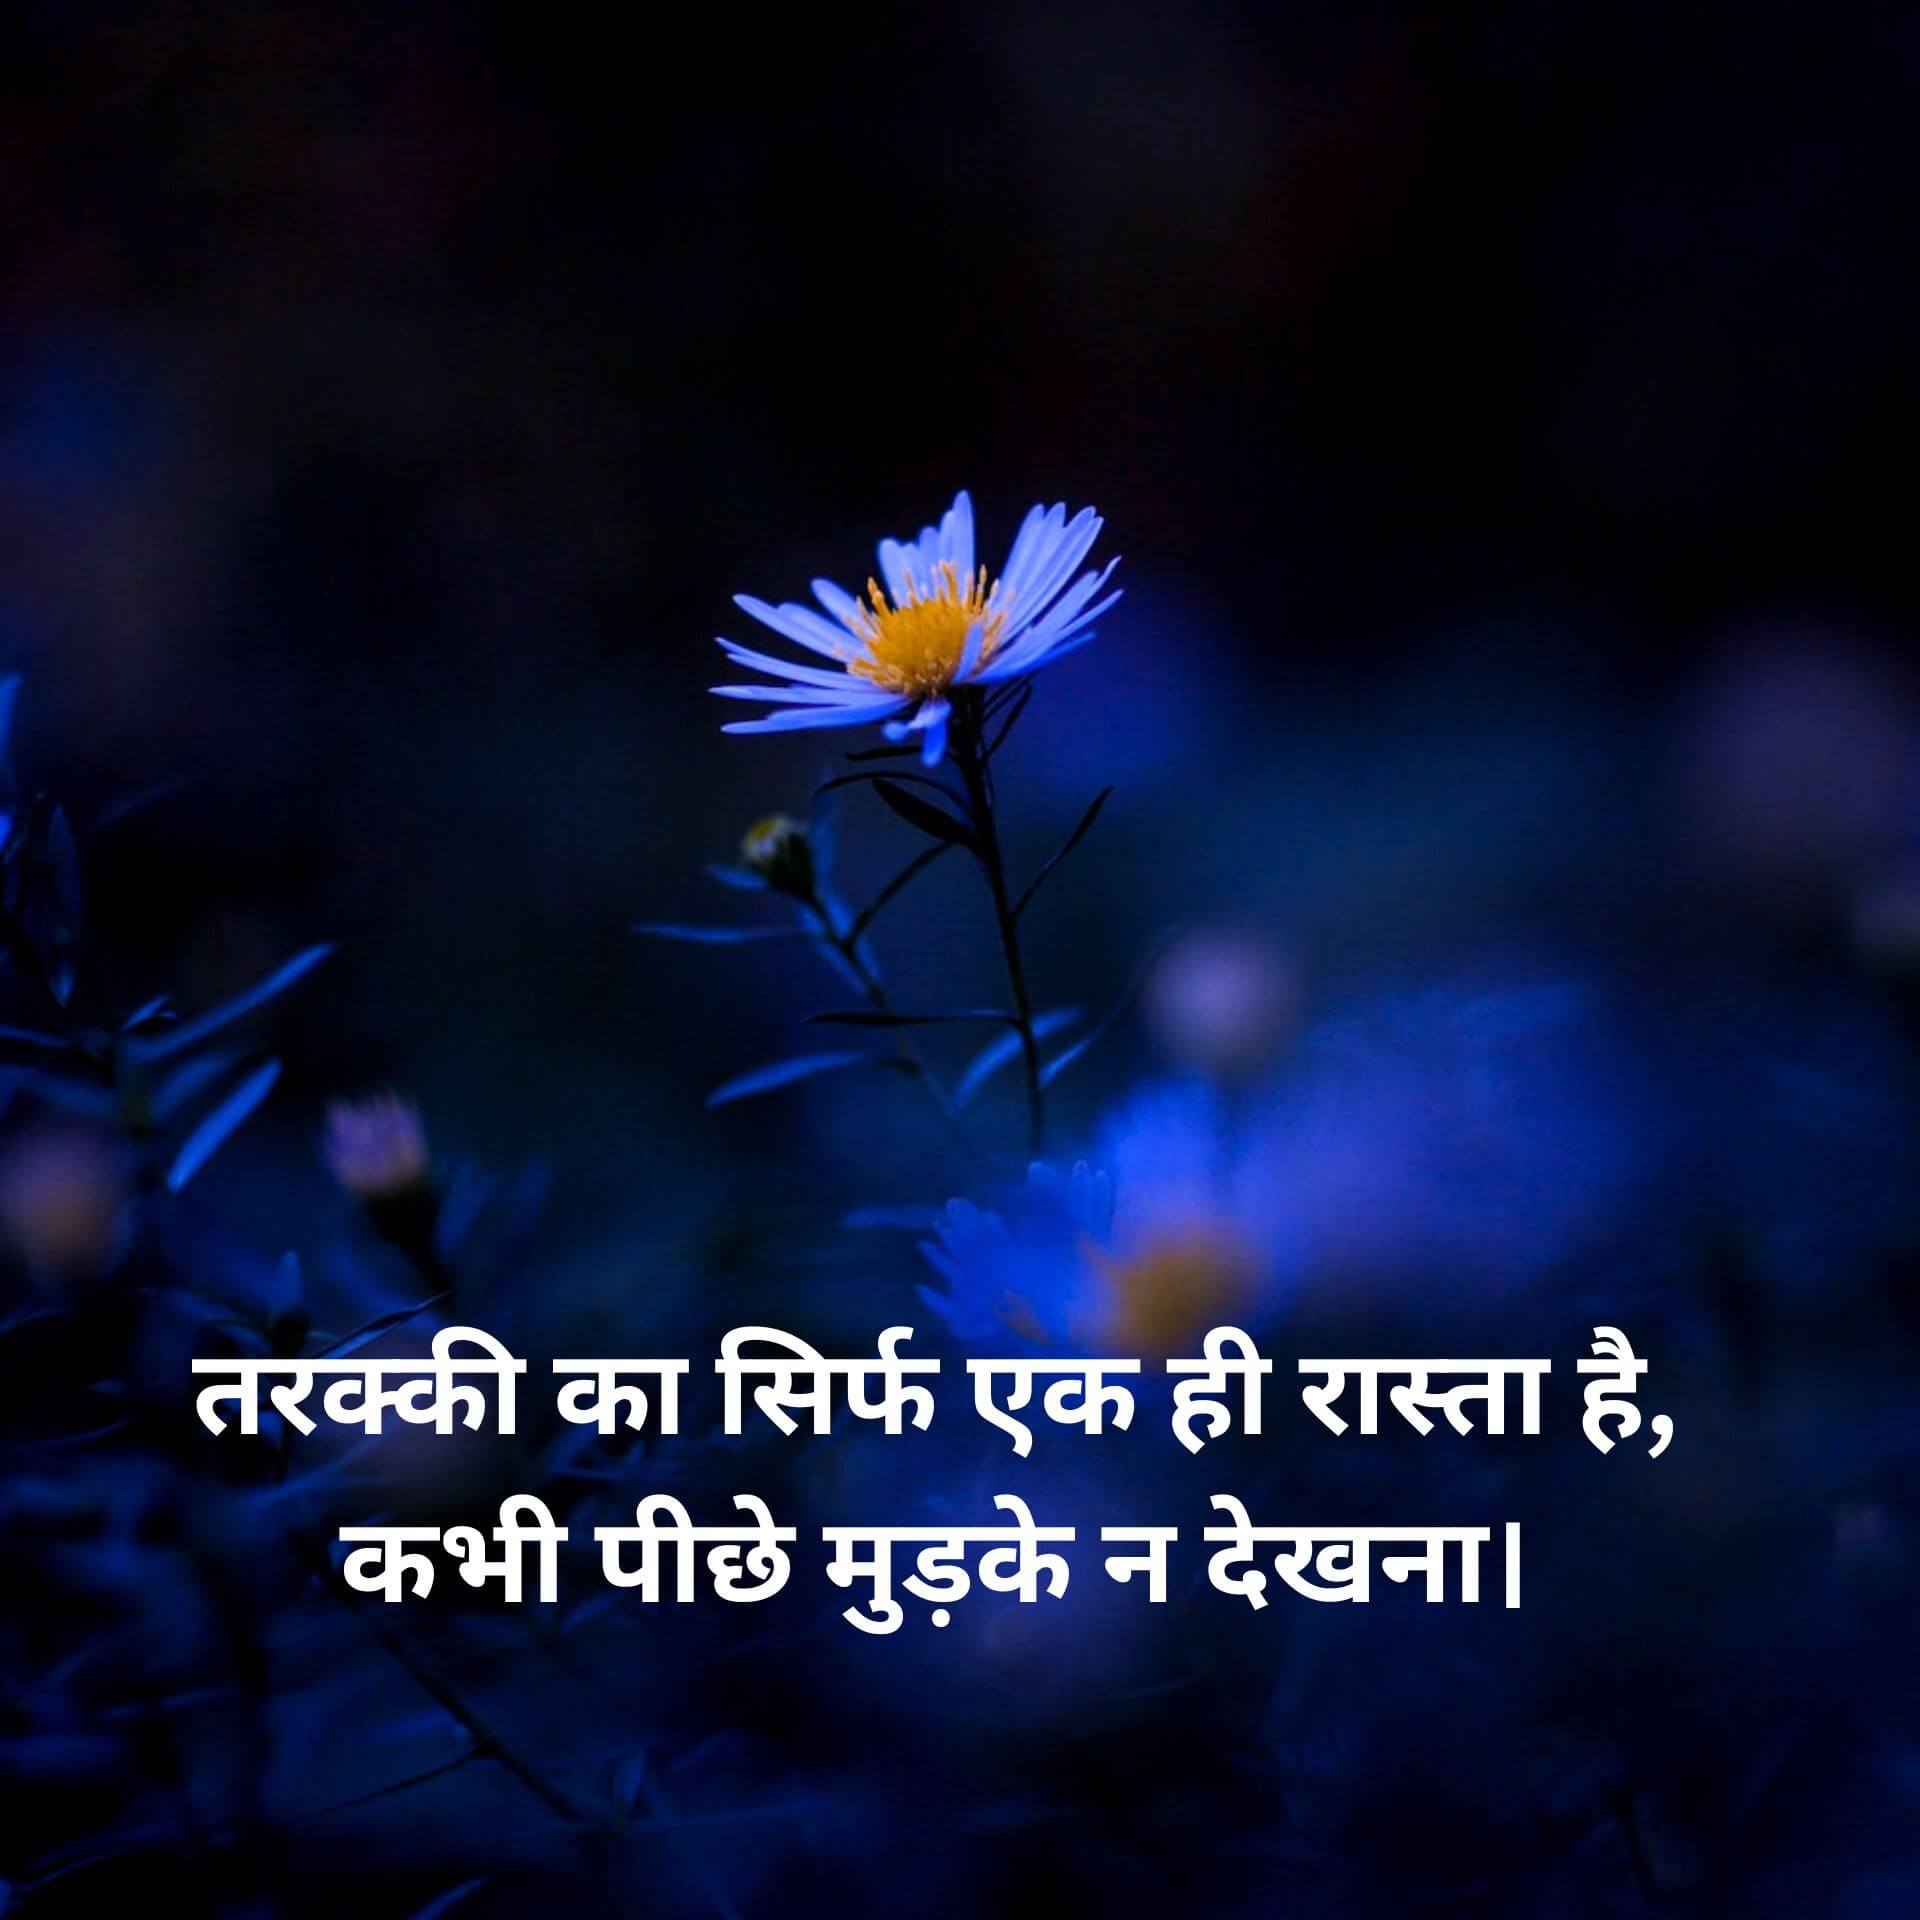 Hindi Motivational Quotes Pics Download